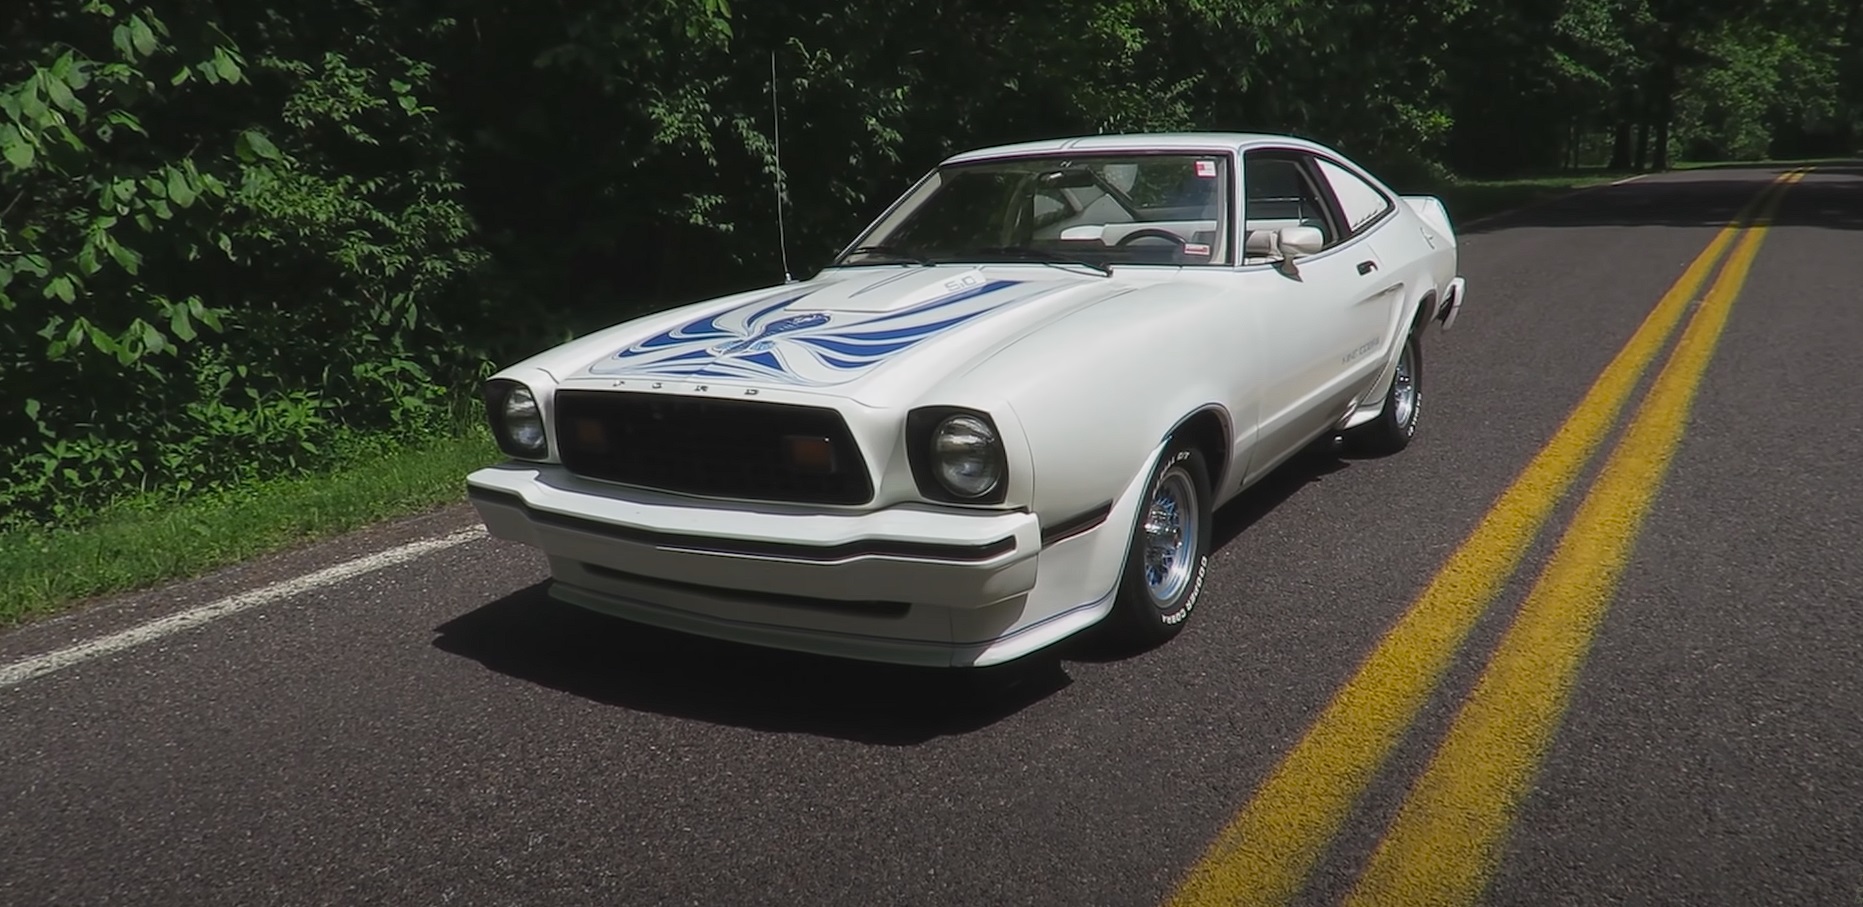 VIdeo: 1978 Ford Mustang King Cobra Full Tour + Test Drive